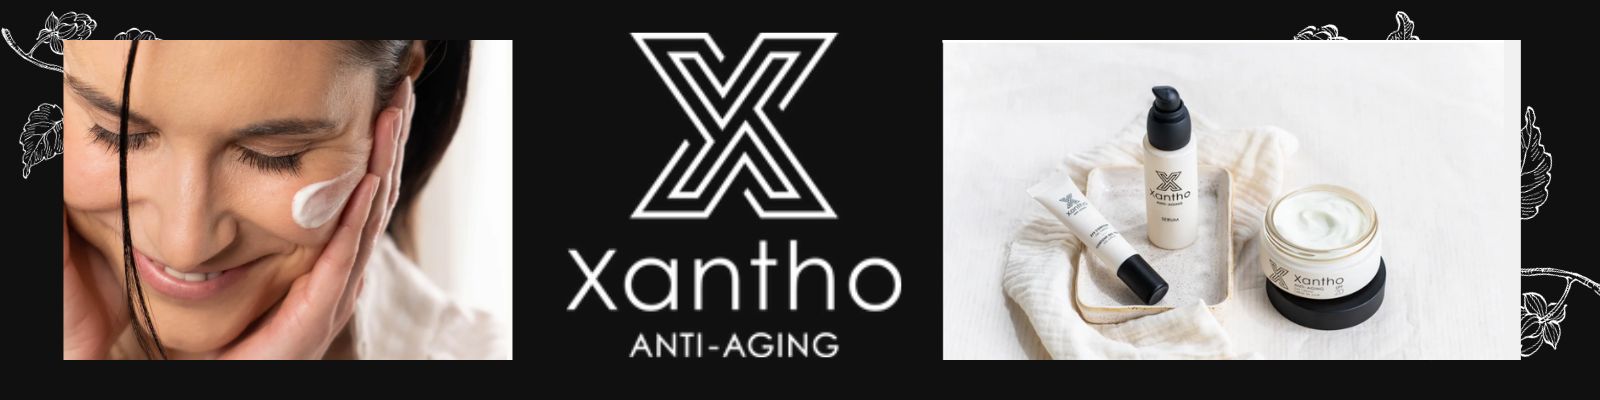 Xantho, la nouvelle gamme anti-aging